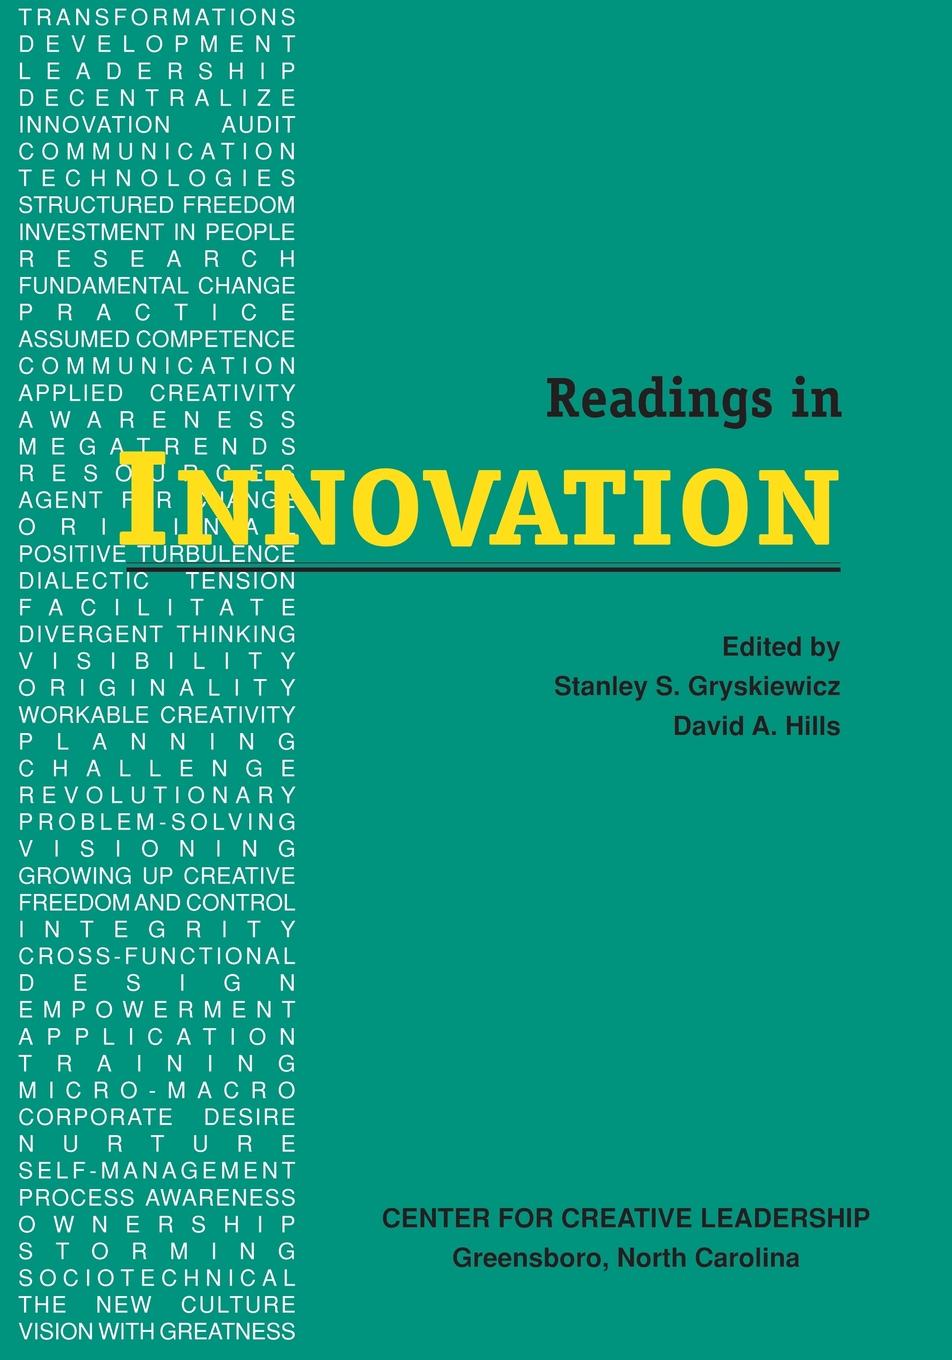 Readings in Innovation - Stanley S. Gryskiewicz, David A. Hills